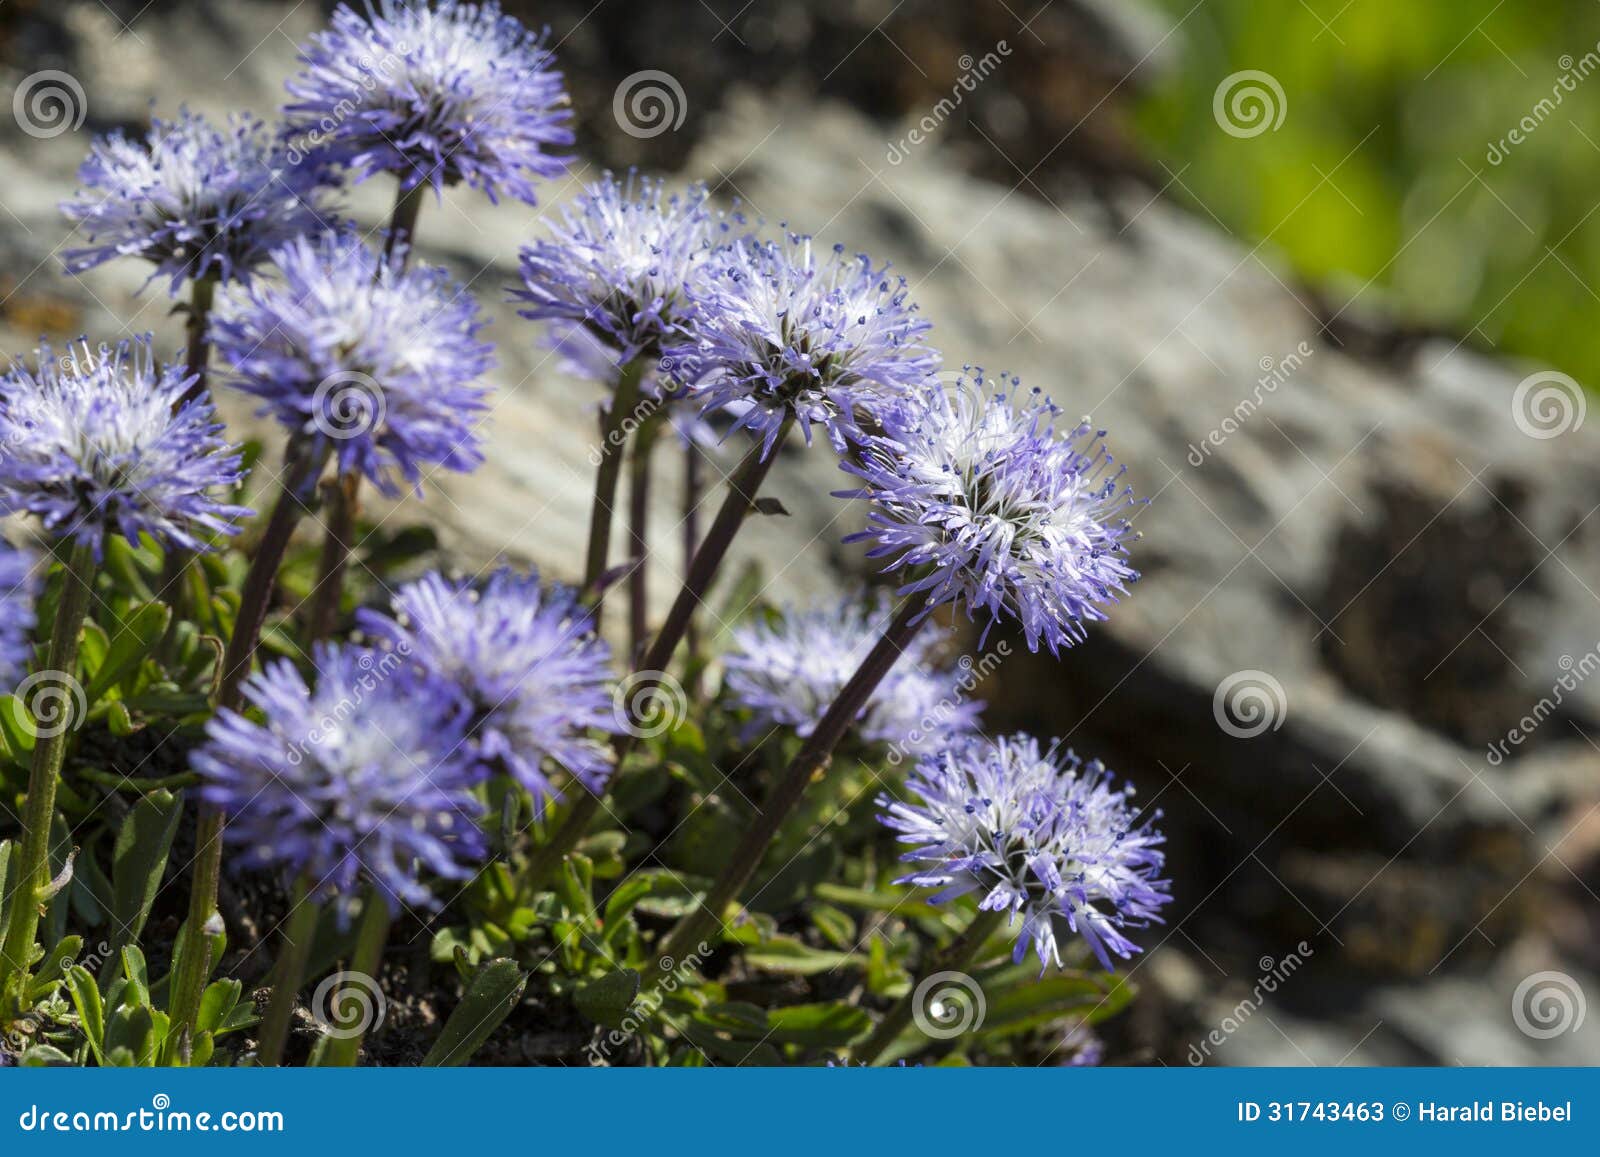 blue balls or globular (globularia cordifolia) flowers